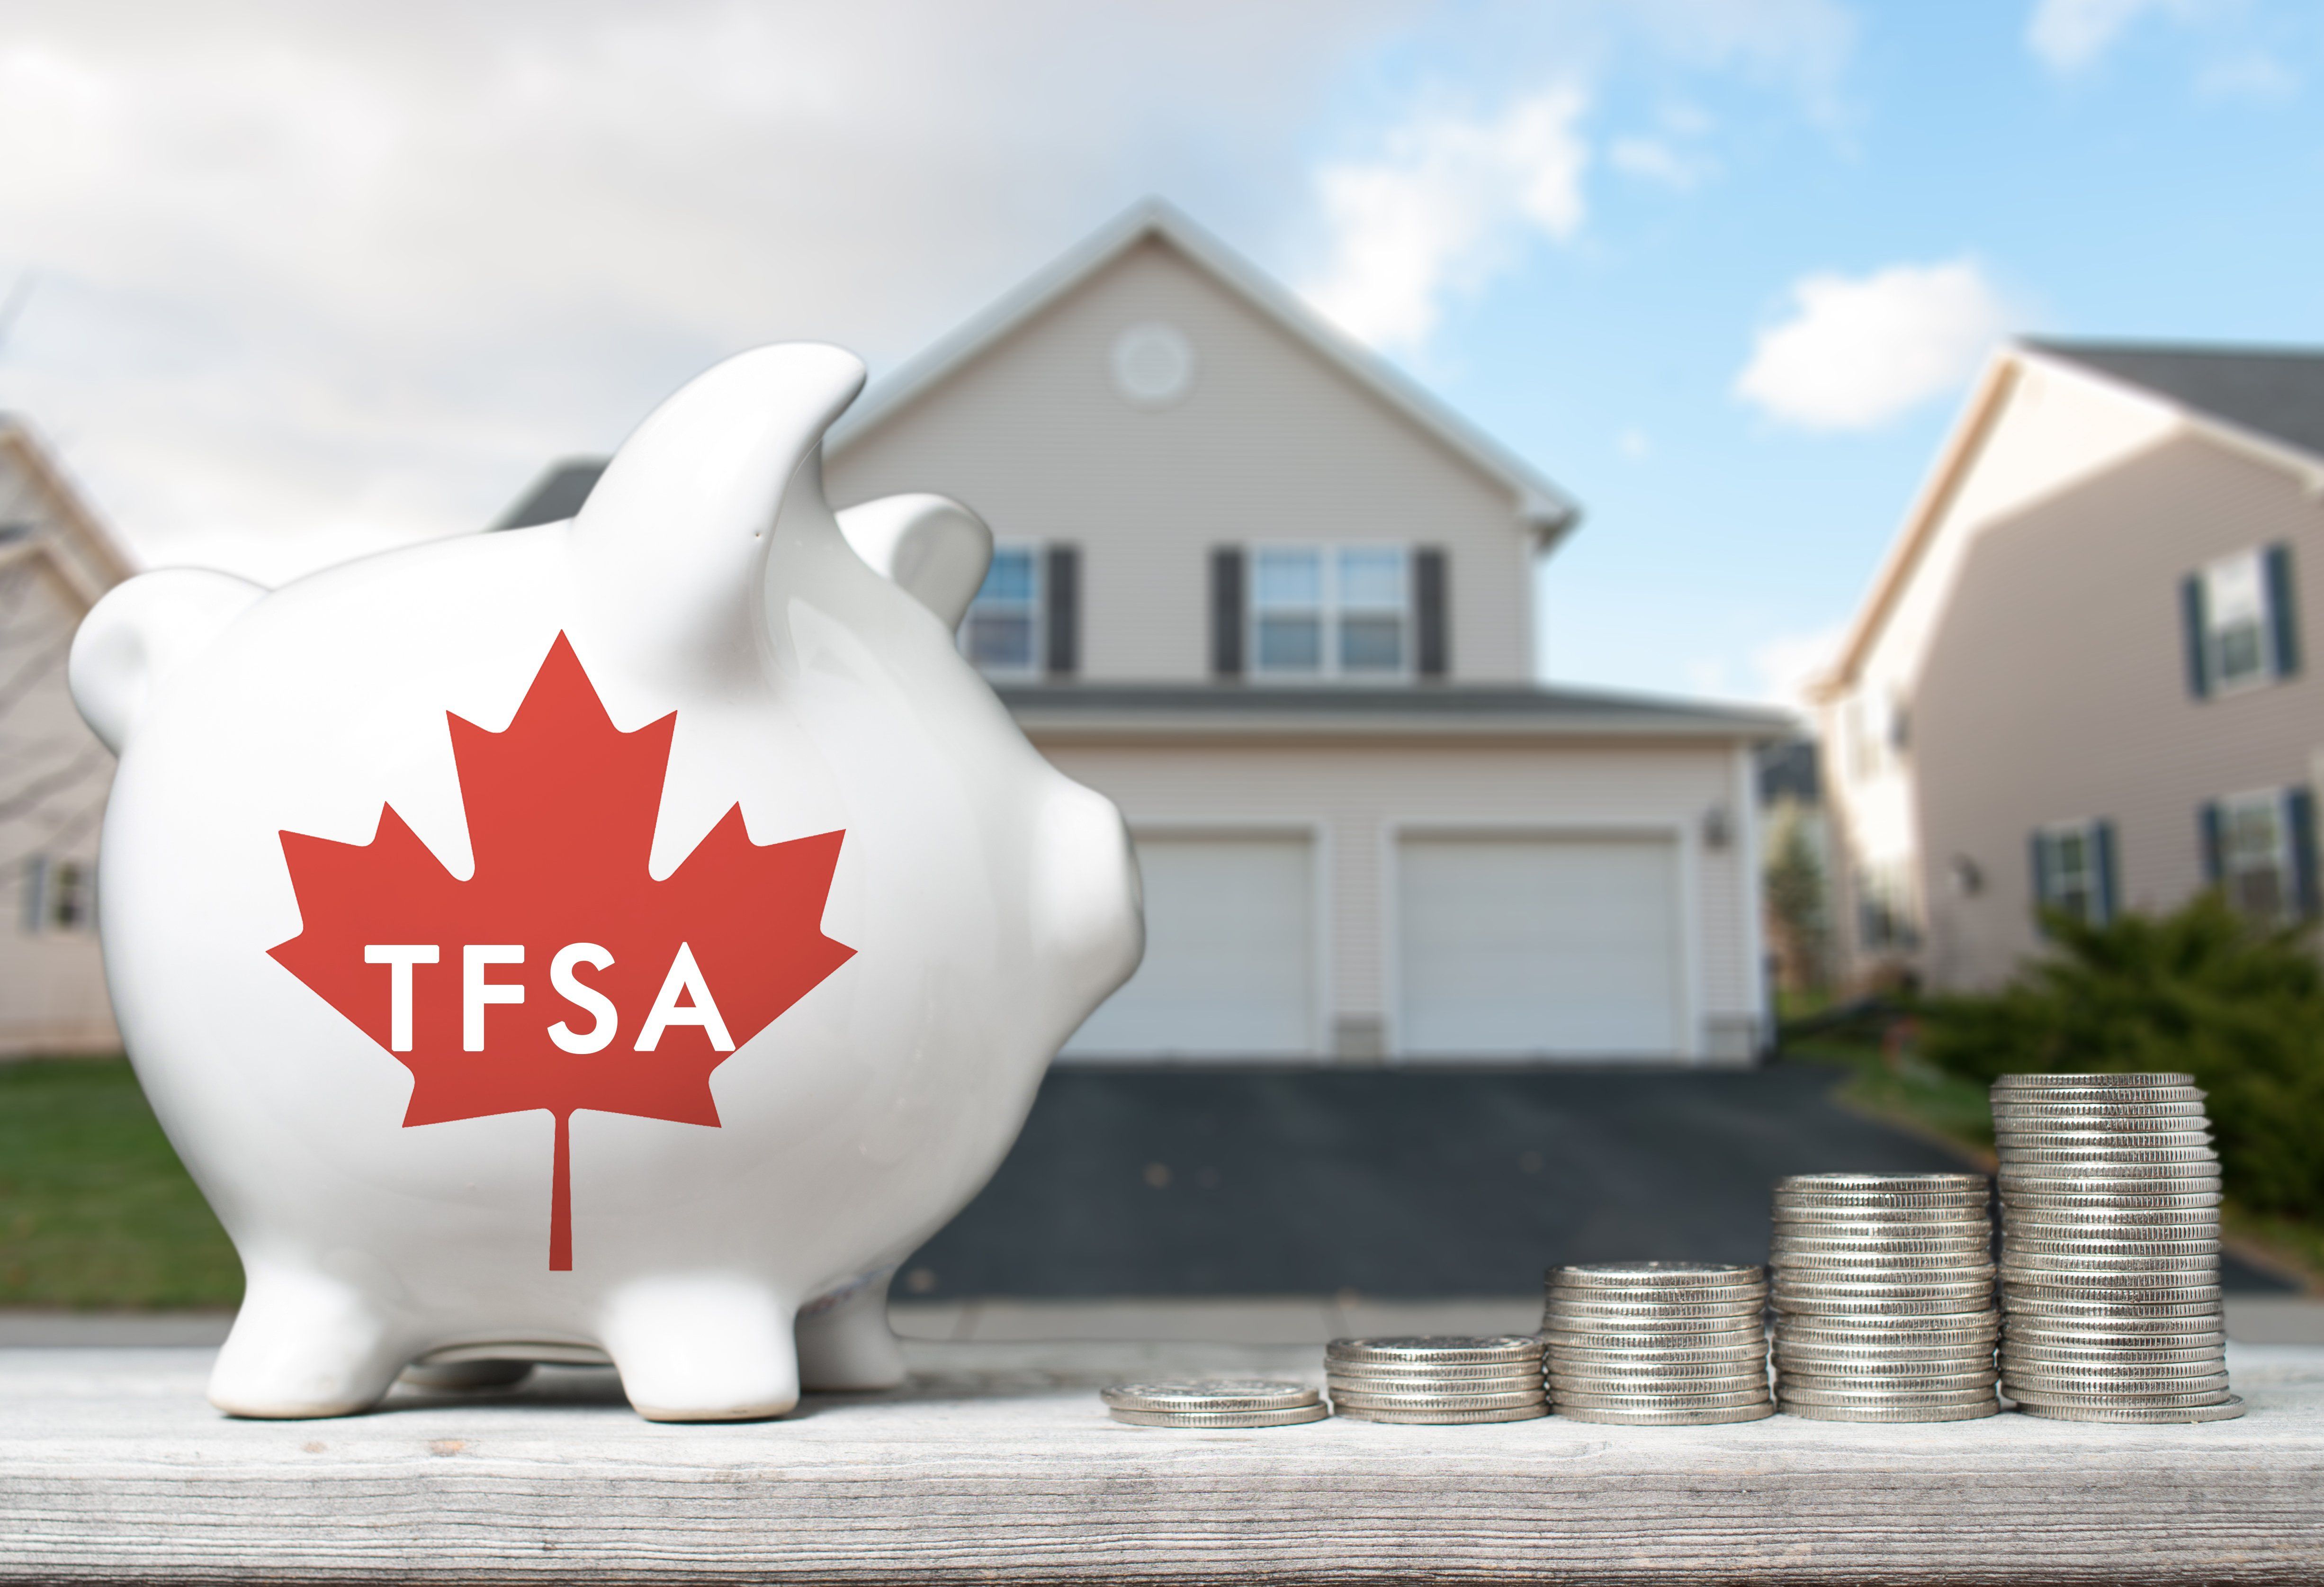 TFSA savings accounts